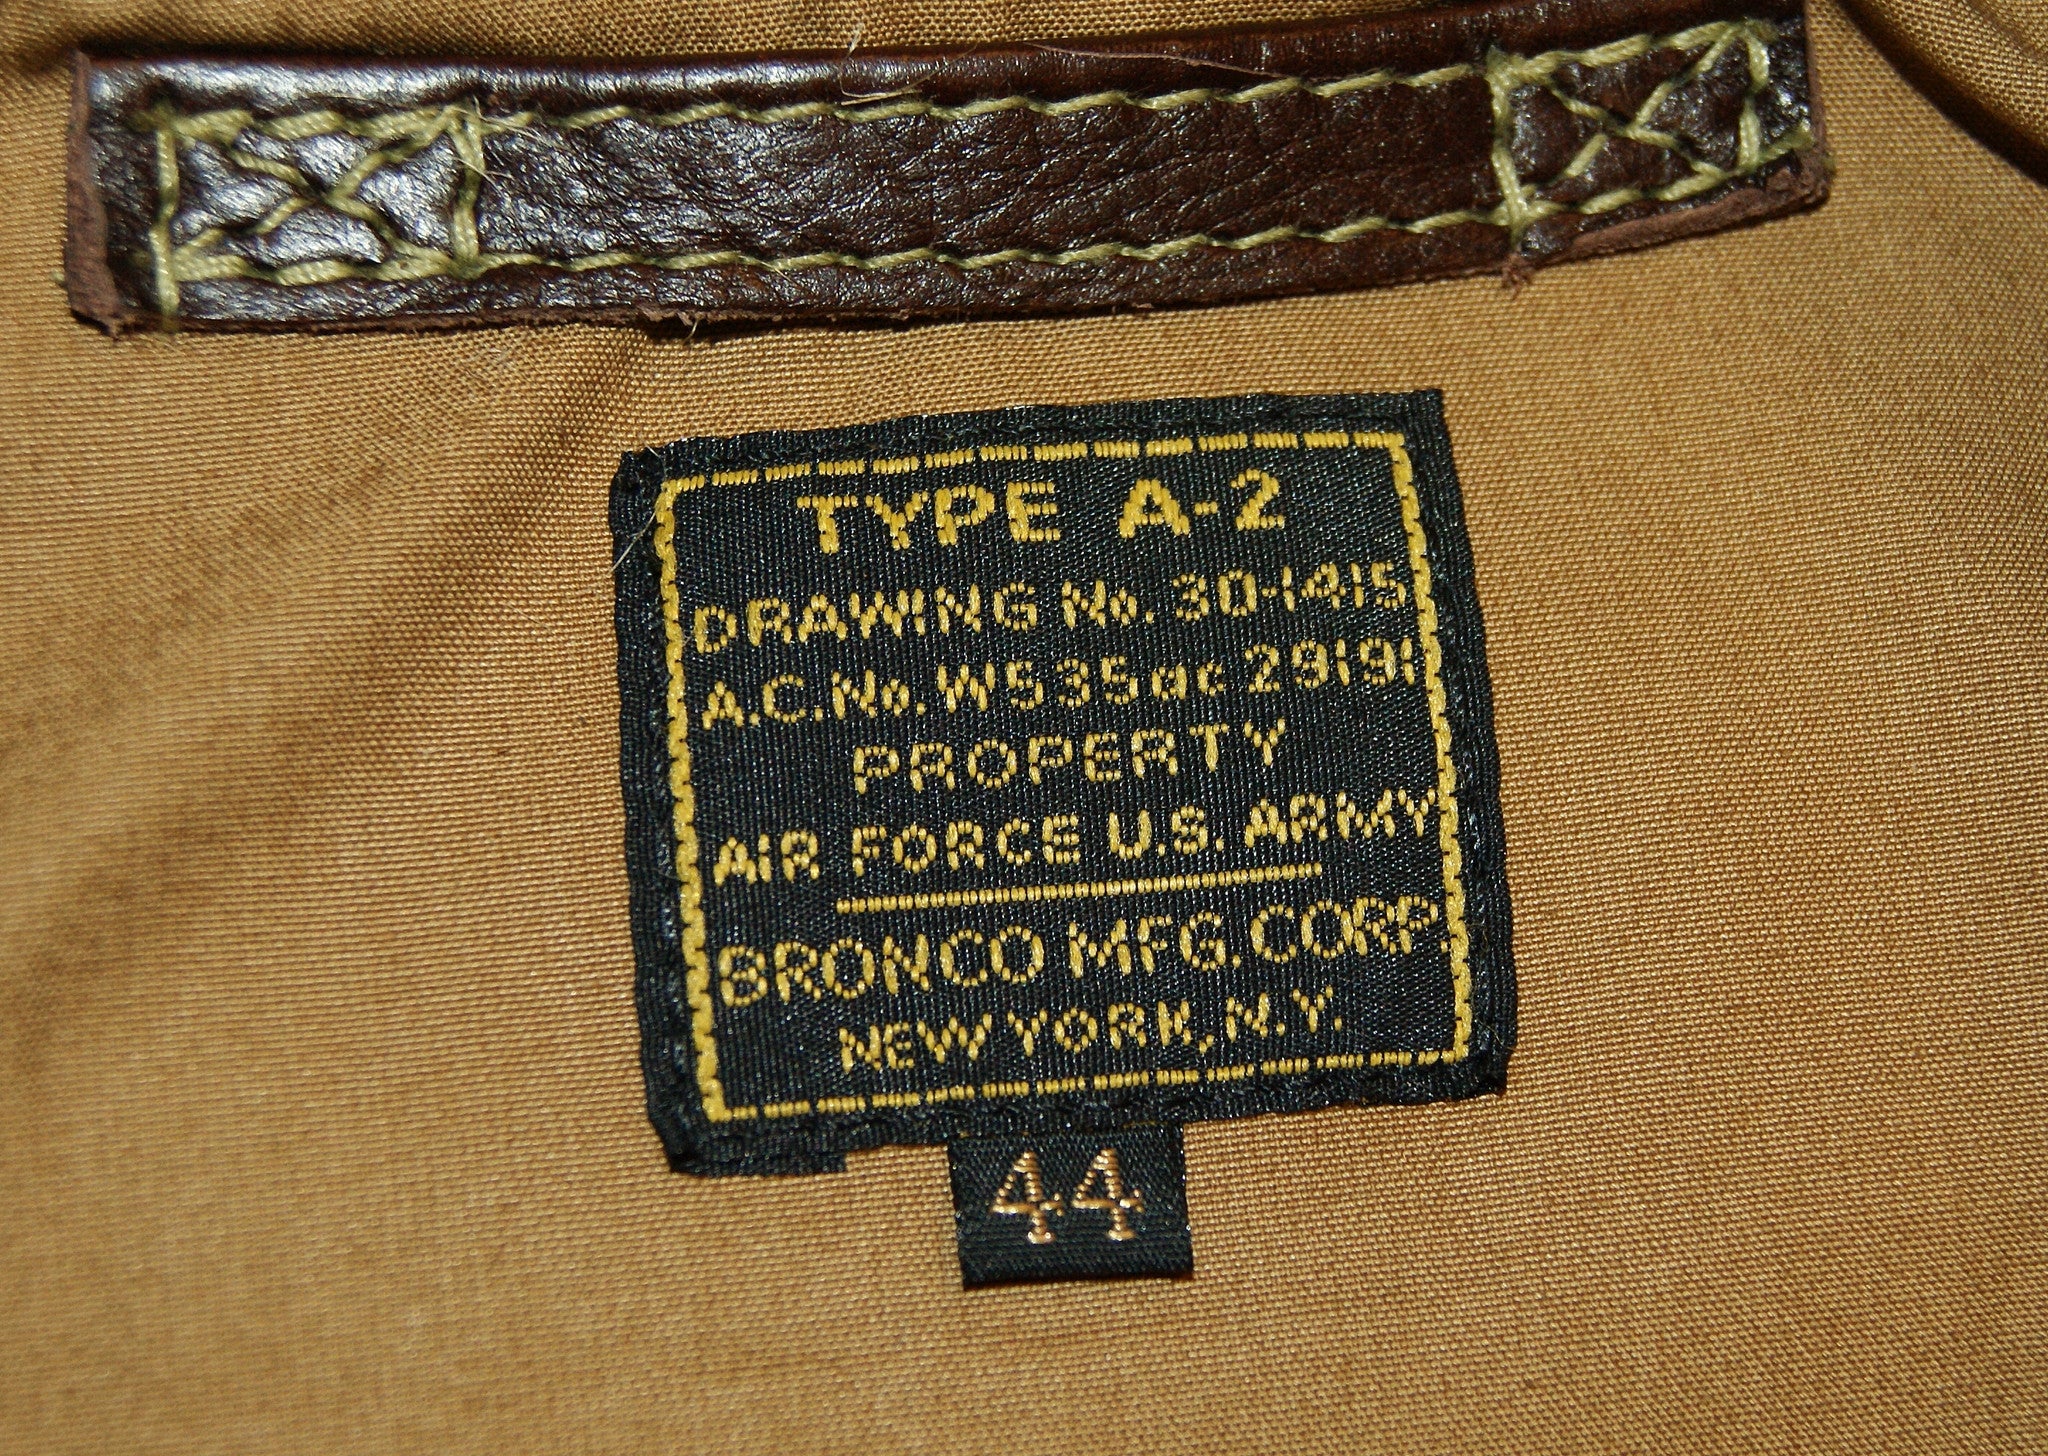 Aero A-2 Military Flight Jacket, size 44, Seal Vicenza Horsehide